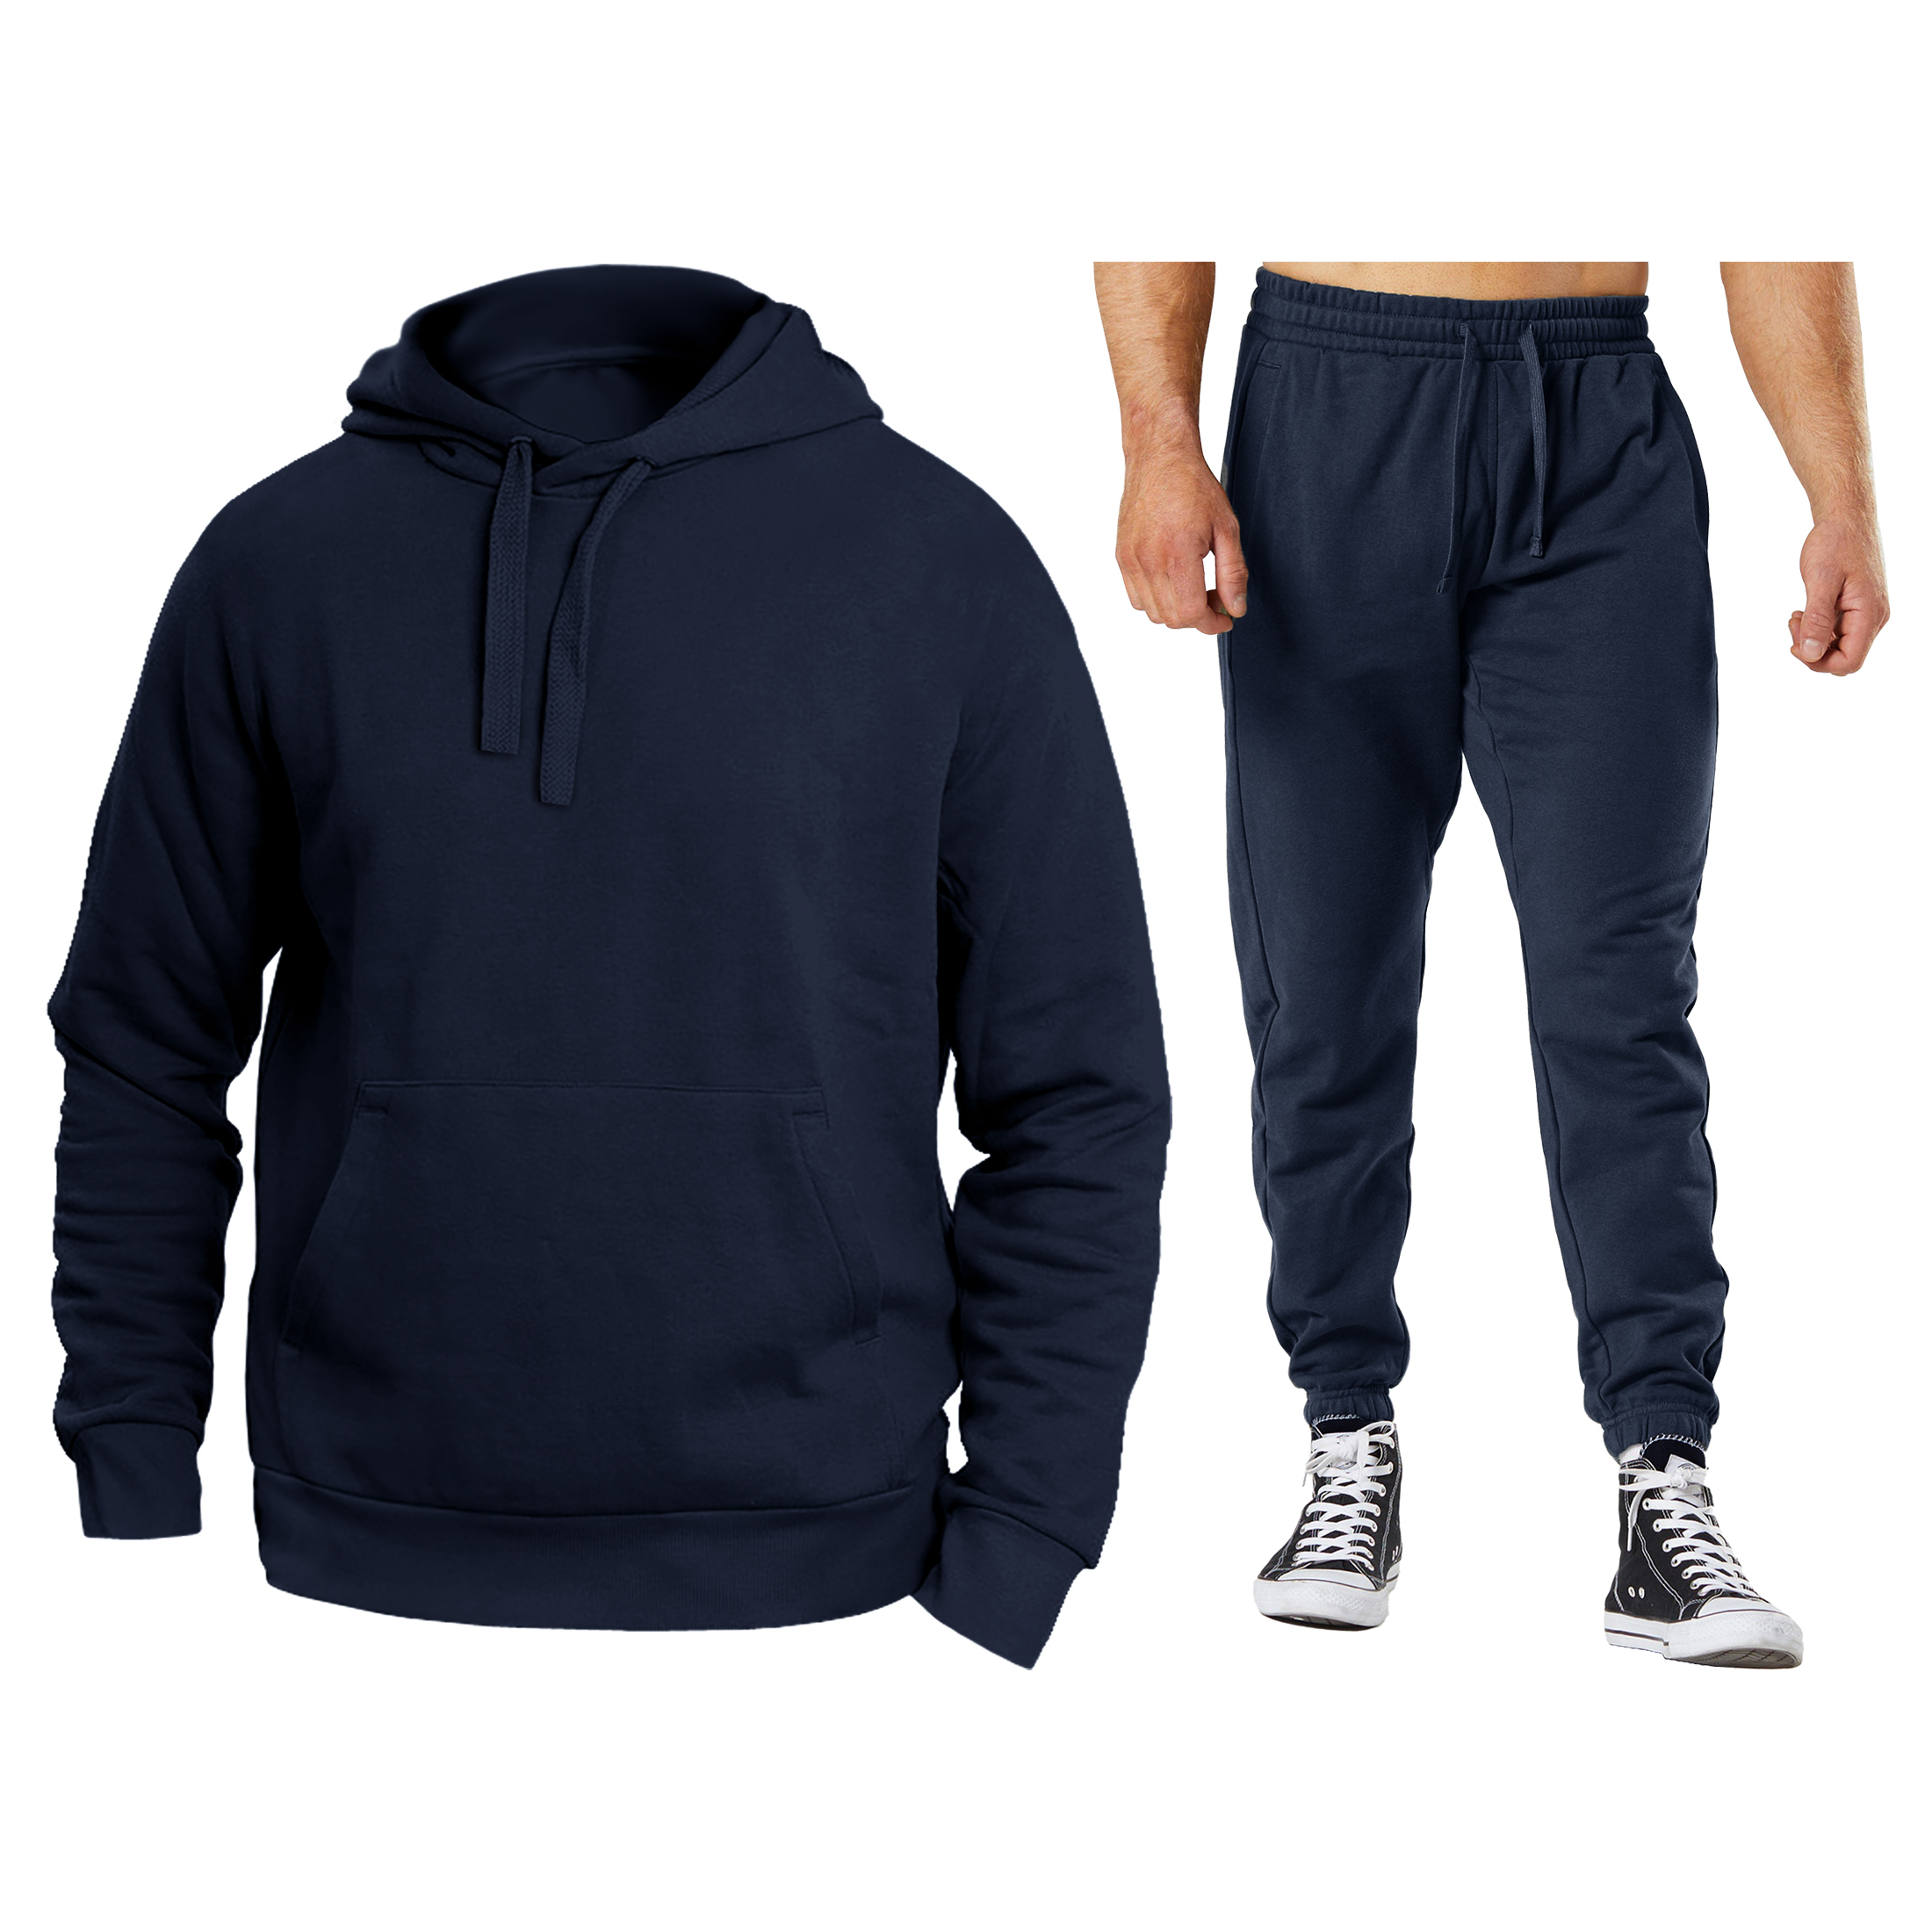 Men's Athletic Warm Jogging Pullover Active Sweatsuit - Charcoal, Large